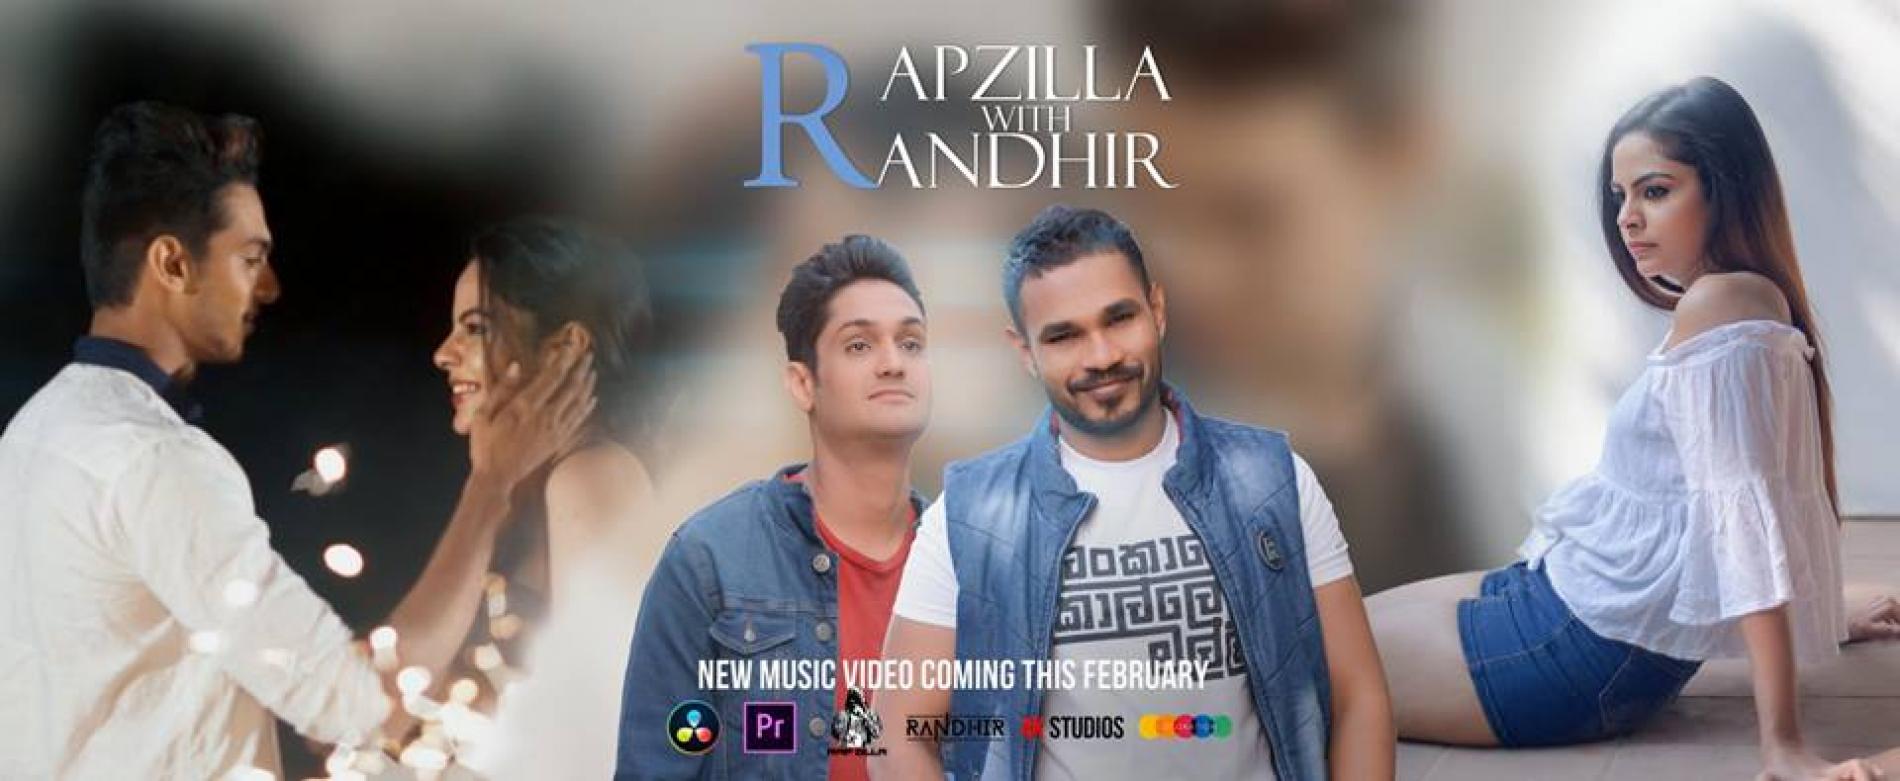 RapZilla With Randhir – Facebook Love